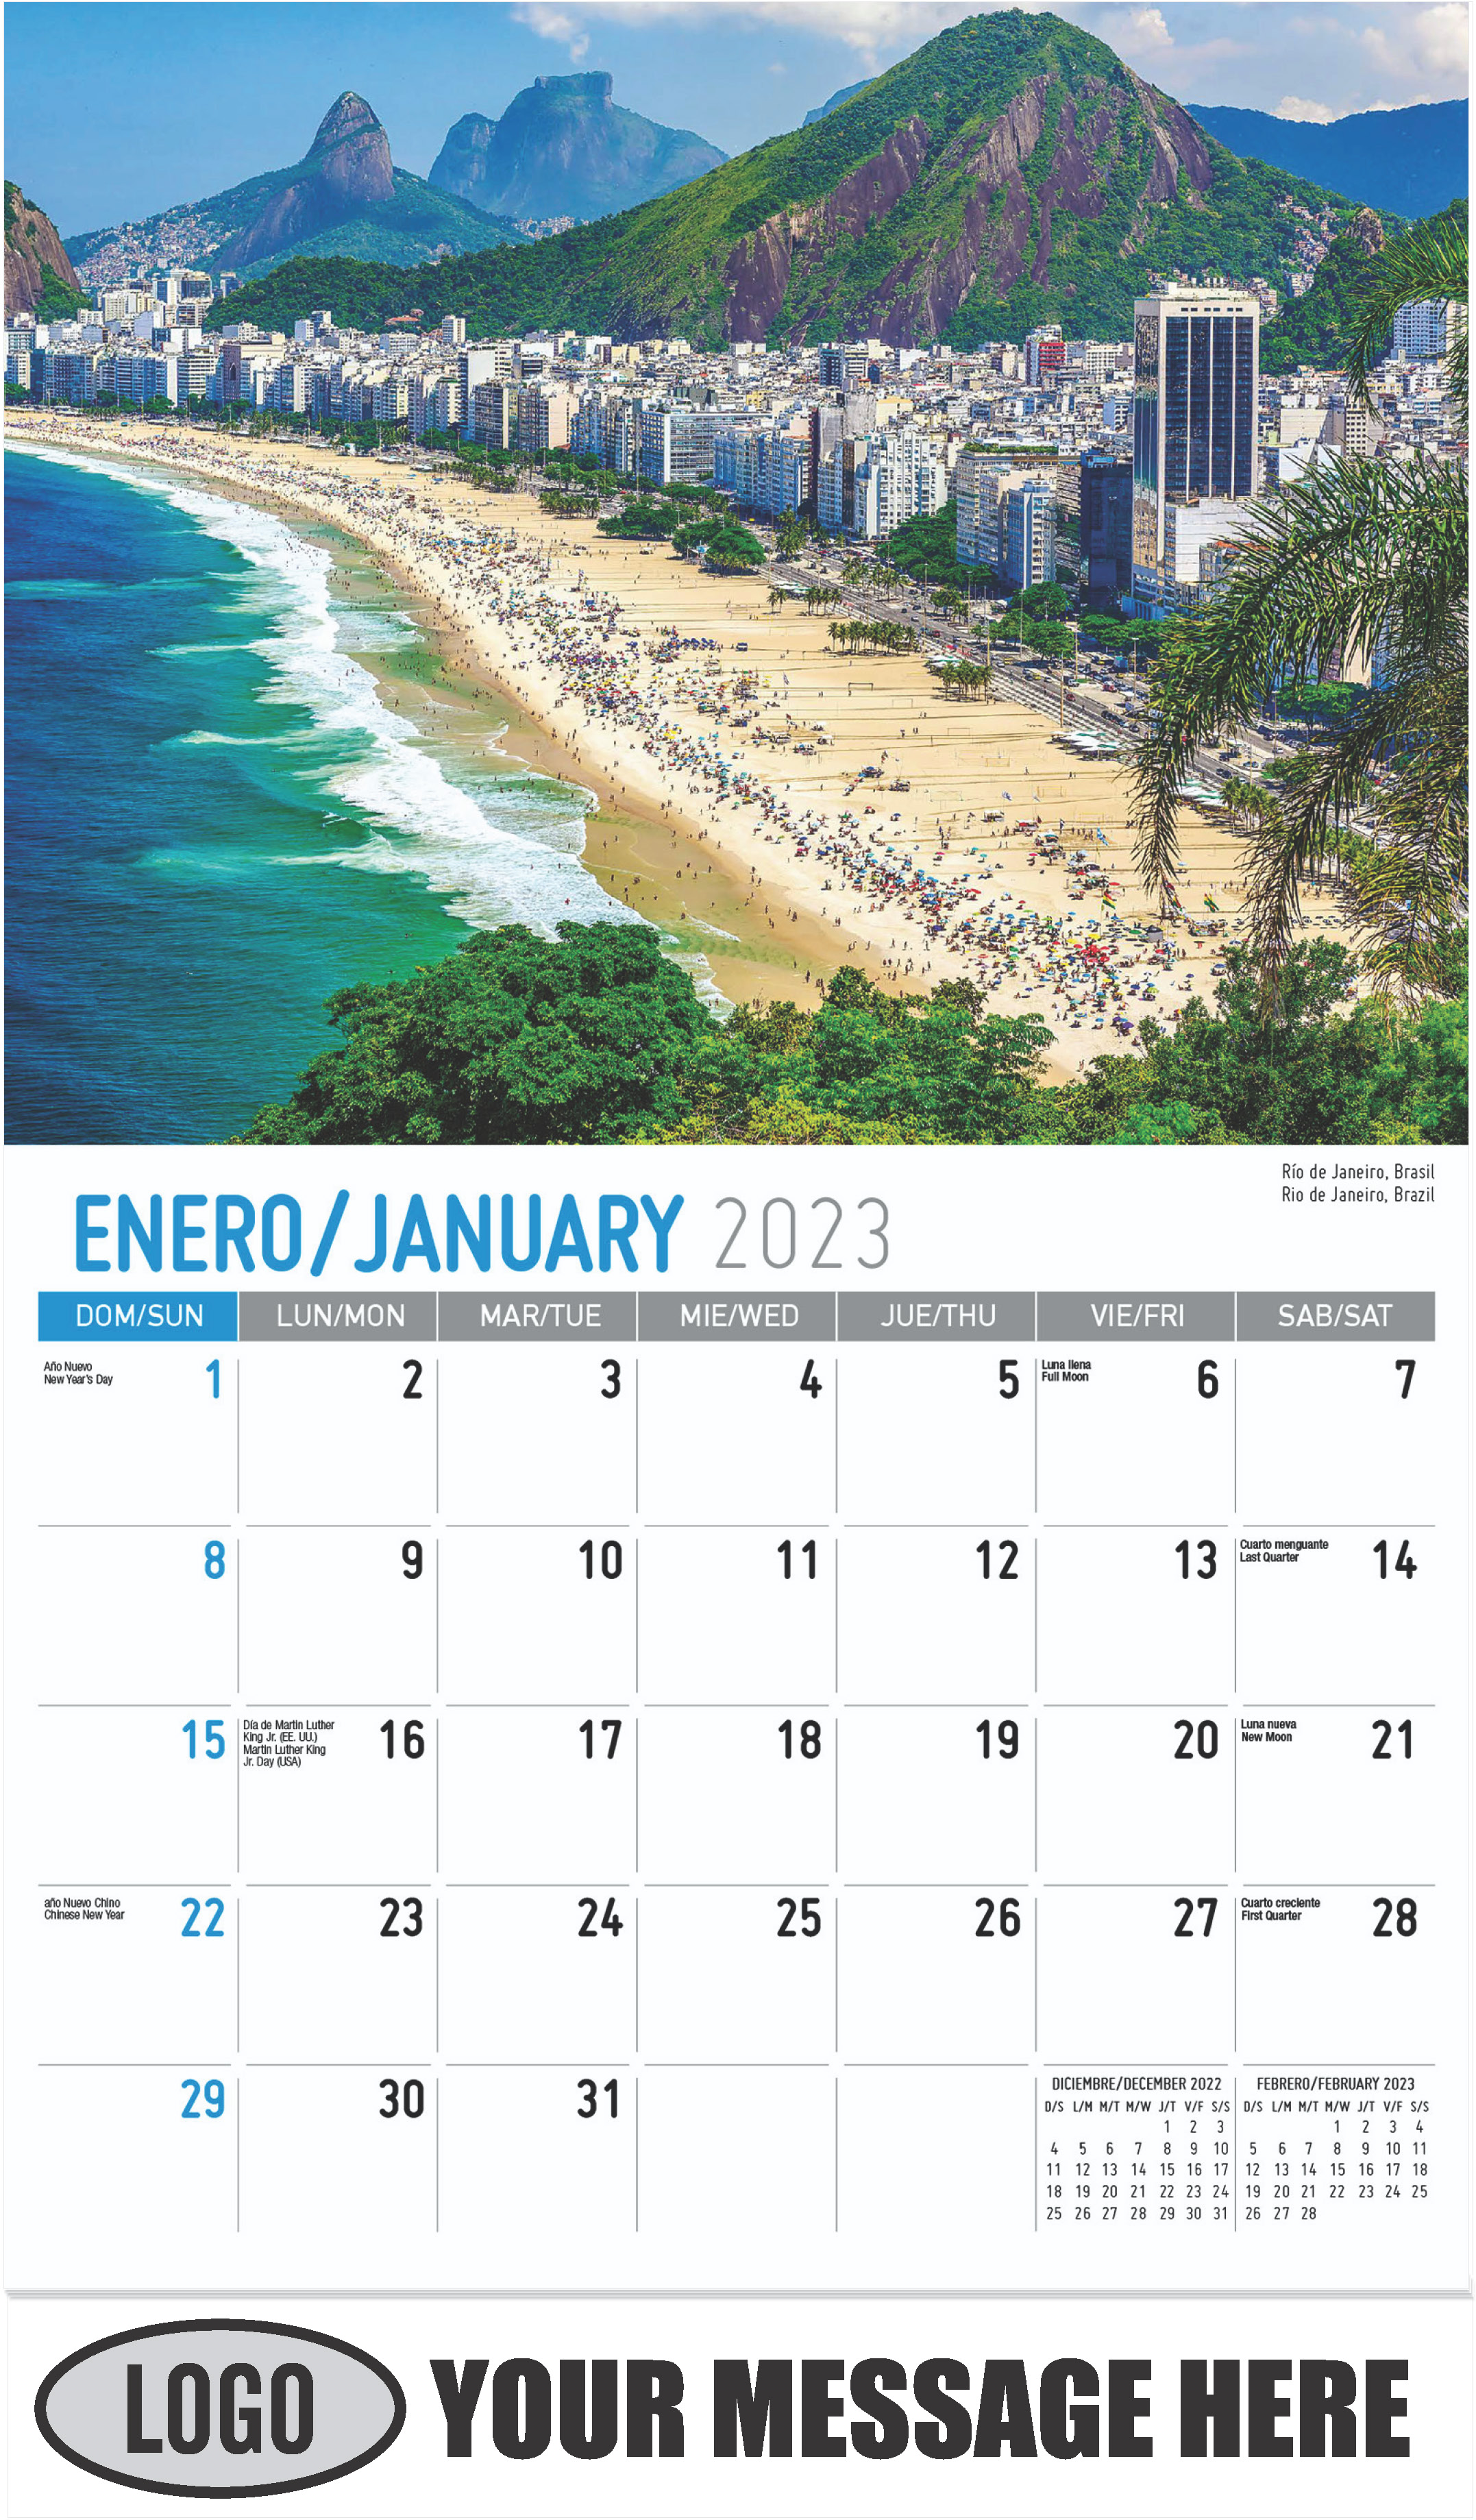 Rio de Janeiro, Brazil - January - Beauty of Latin America 2023 Promotional Calendar